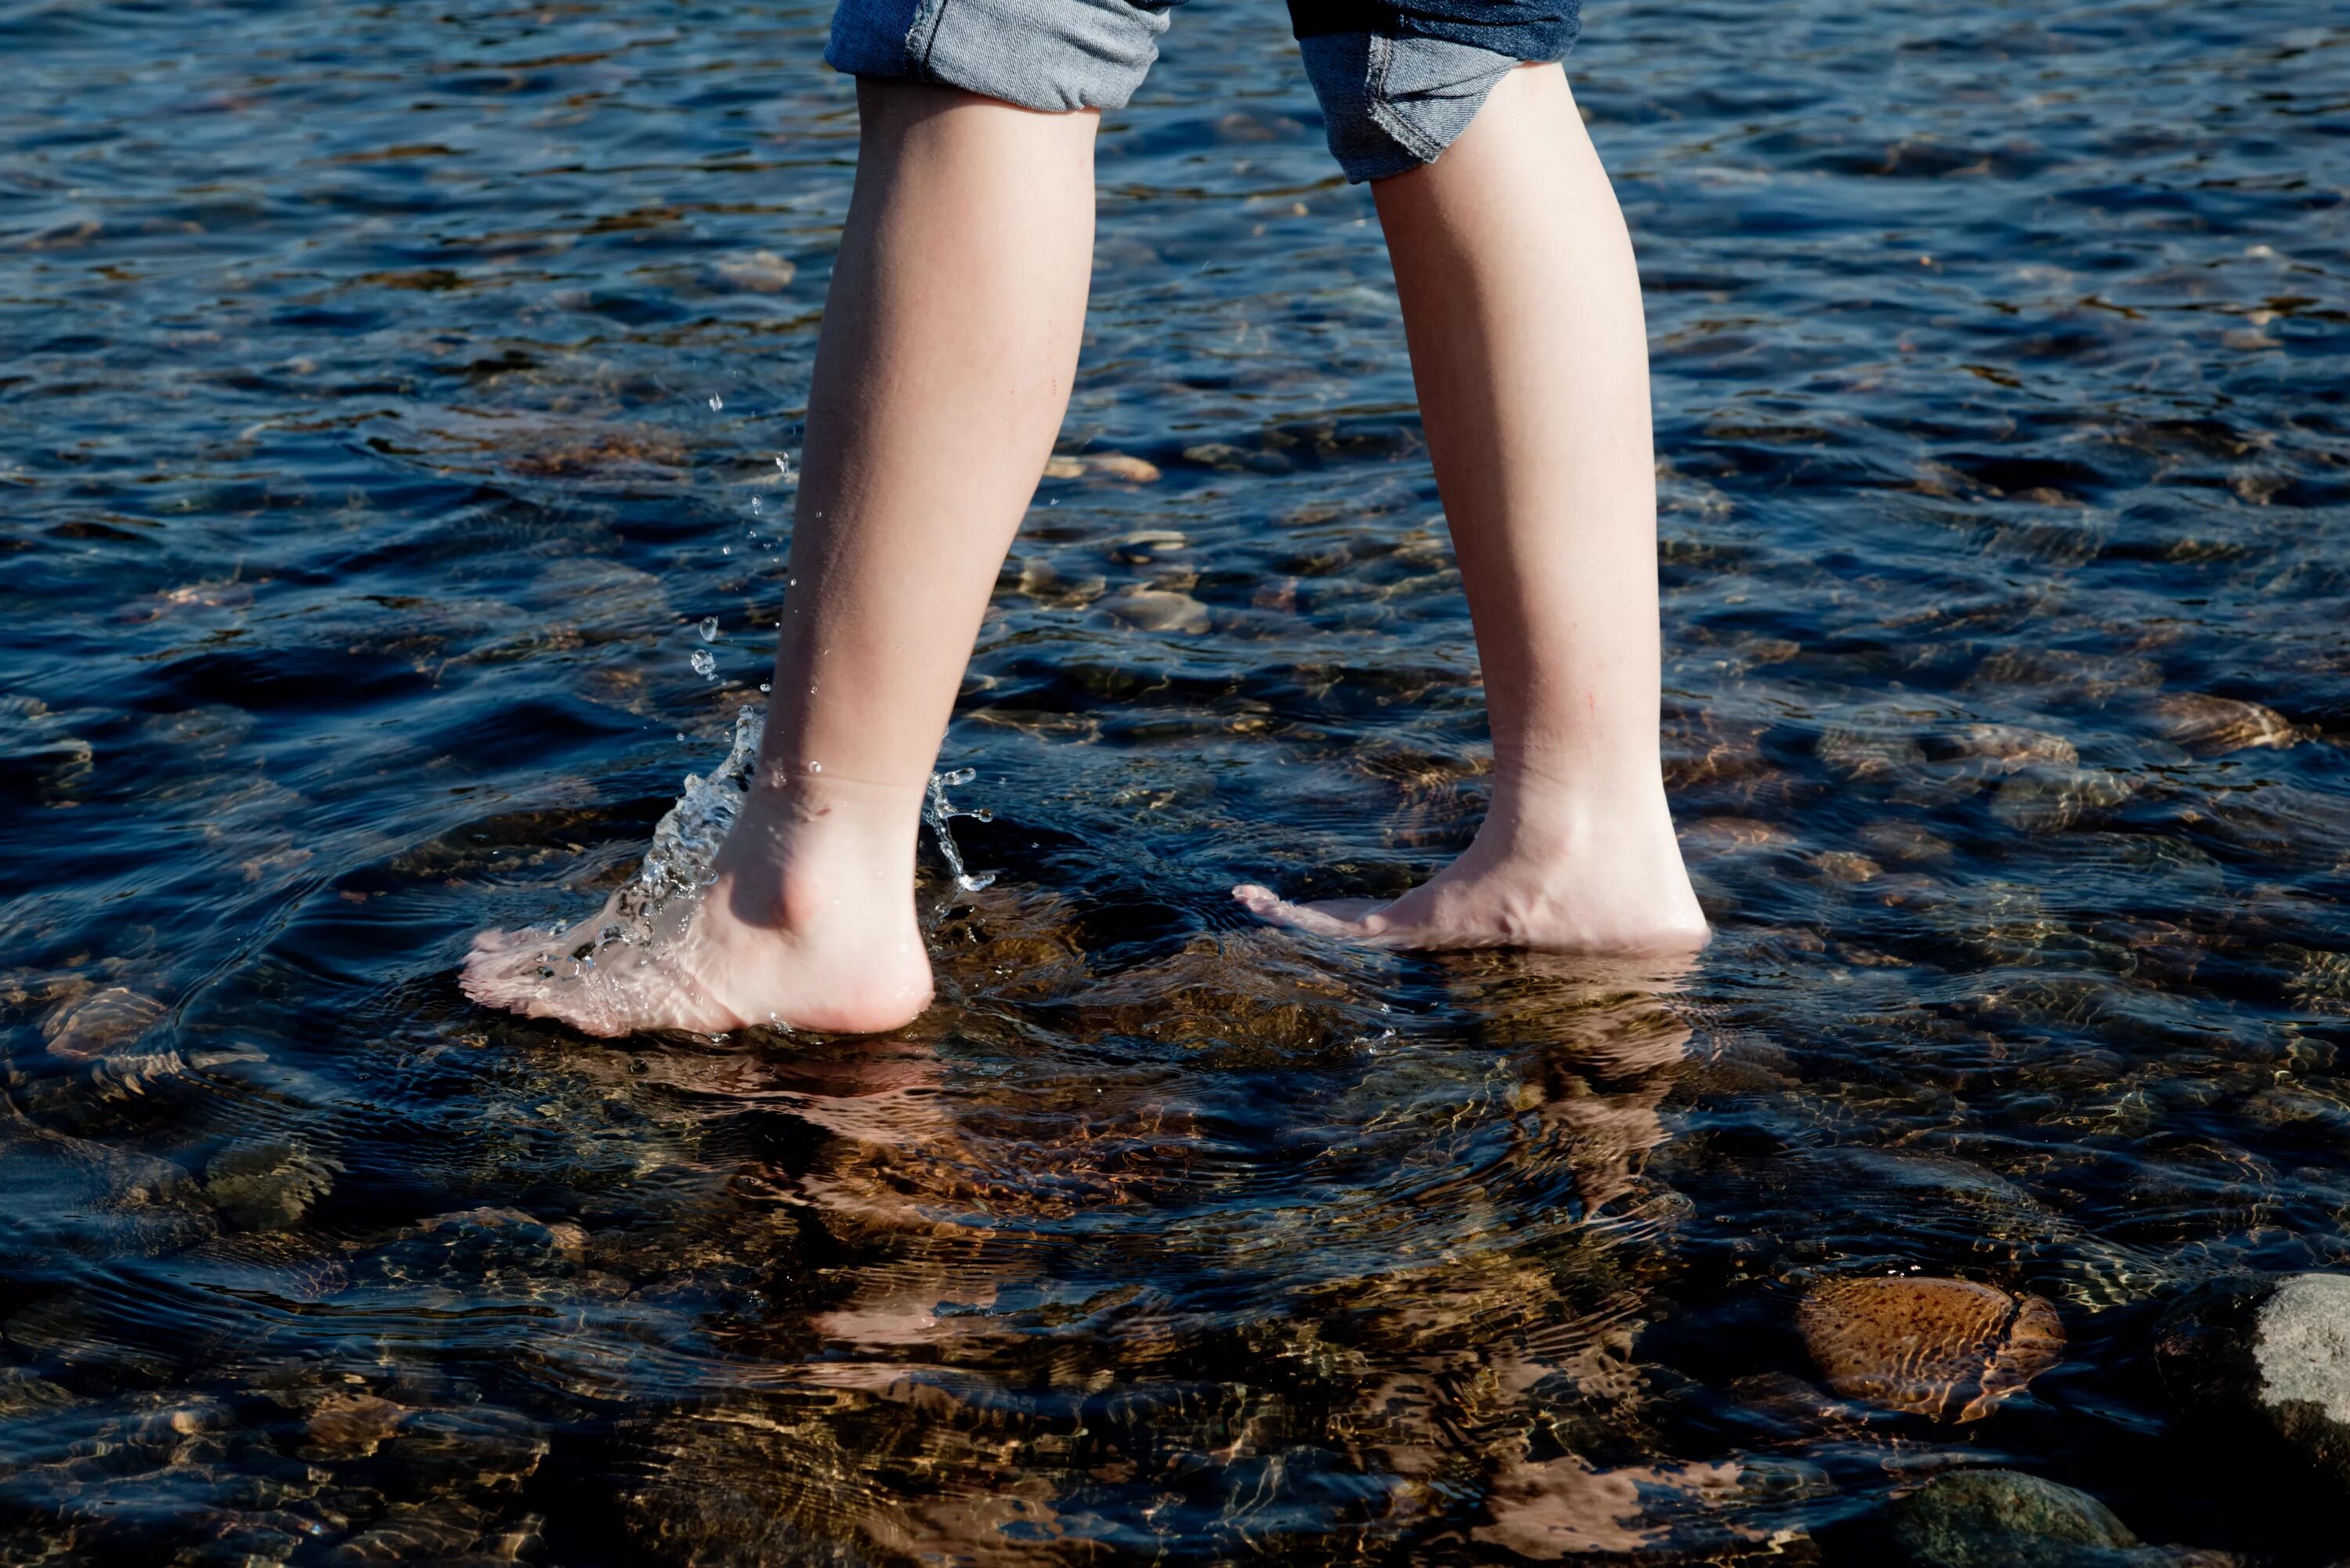 Дерево ногами в воде. Ступни в воде. Мужские ноги в воде. Босые ноги в воде. Ноги в прозрачной воде.